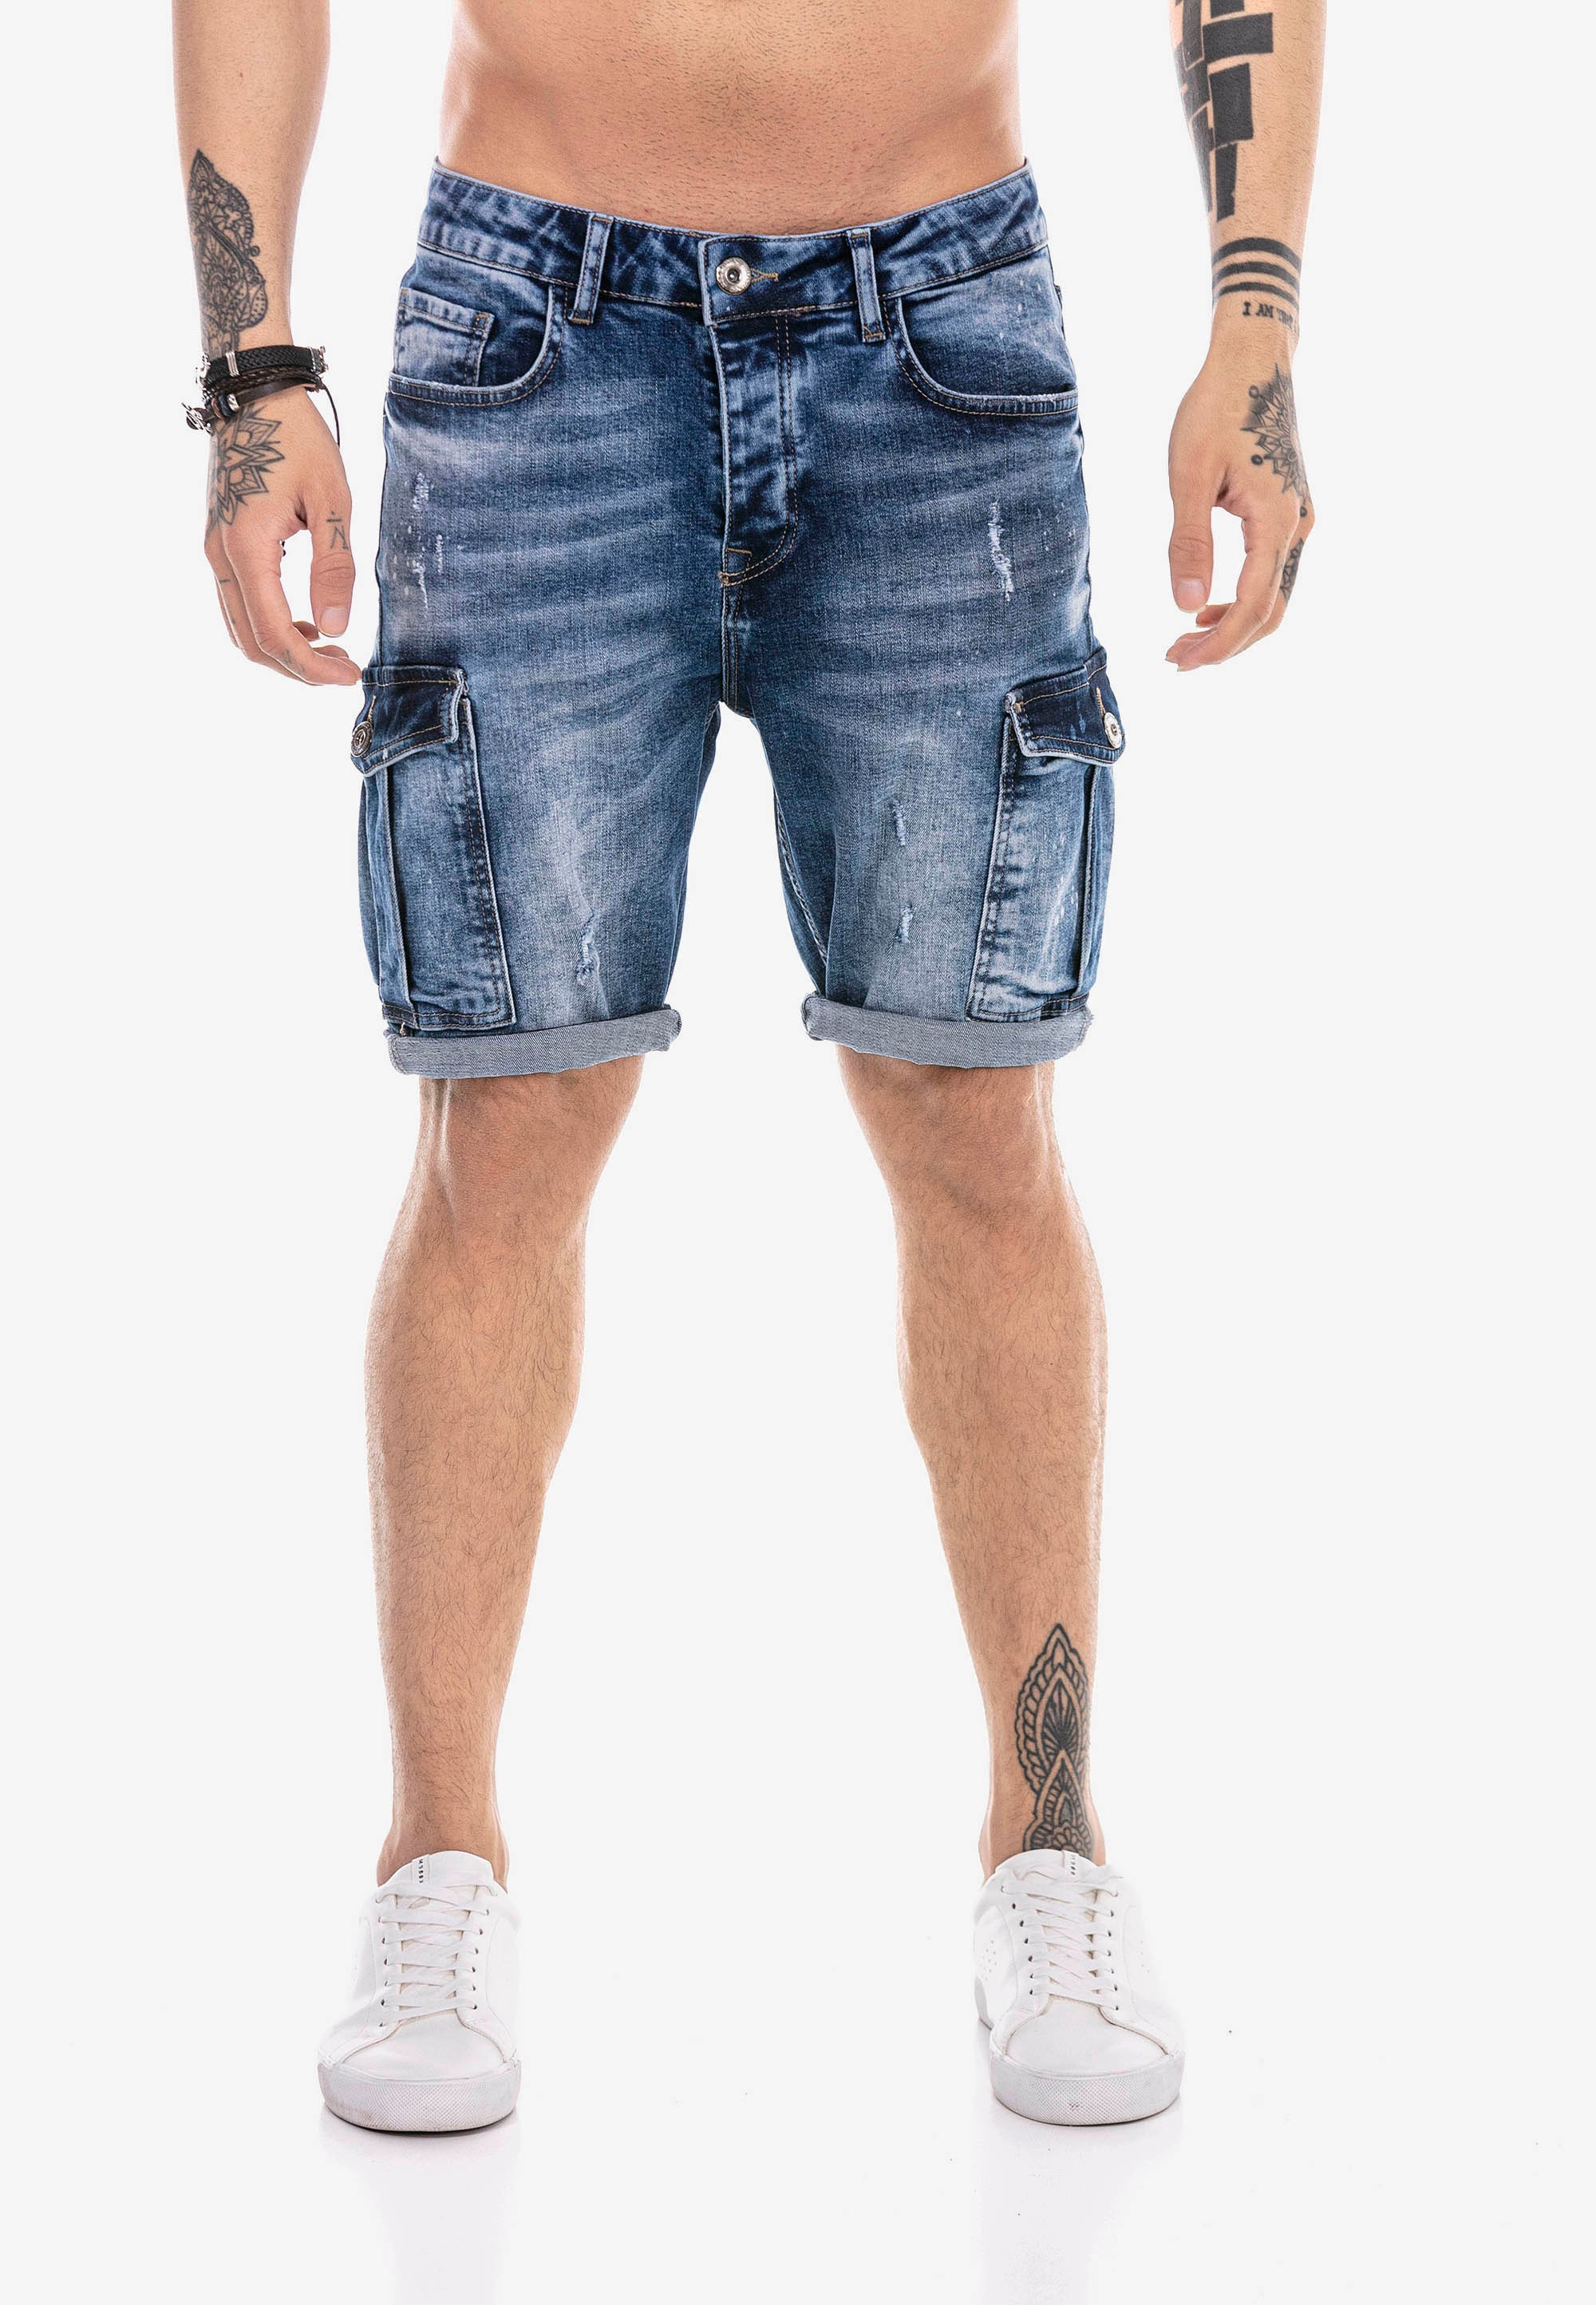 AHORN SPORTSWEAR Shorts »SANTA CRUZ« mit modischem Print | Shorts